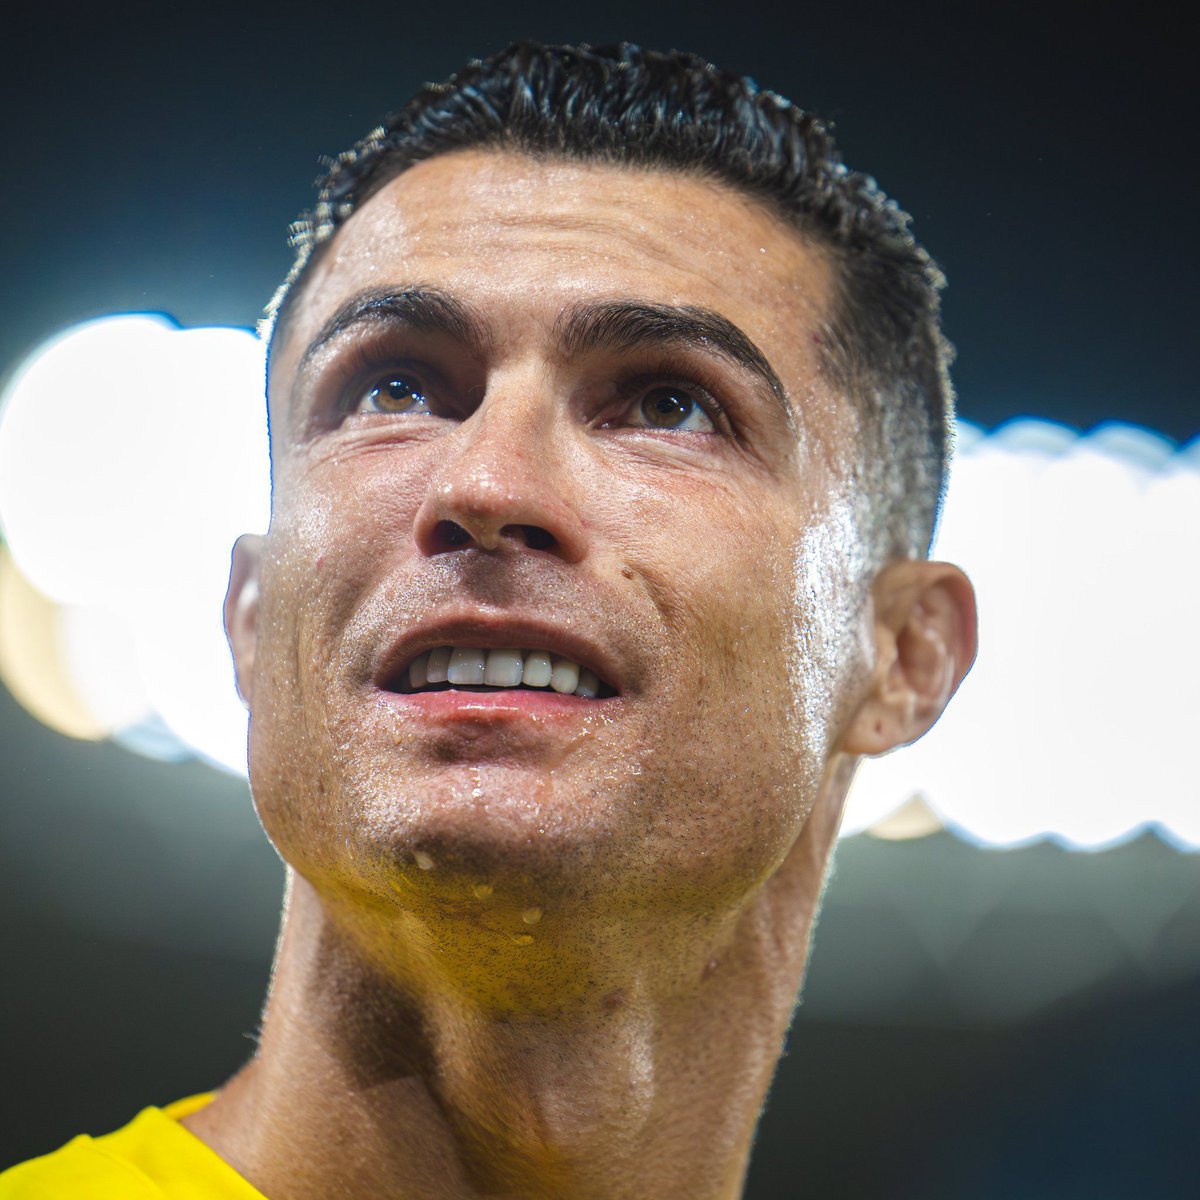 Cristiano Ronaldo needs 13 more goals to reach 900 official career goals. Do you think he’ll get to 1000 goals before he retires? 🤔